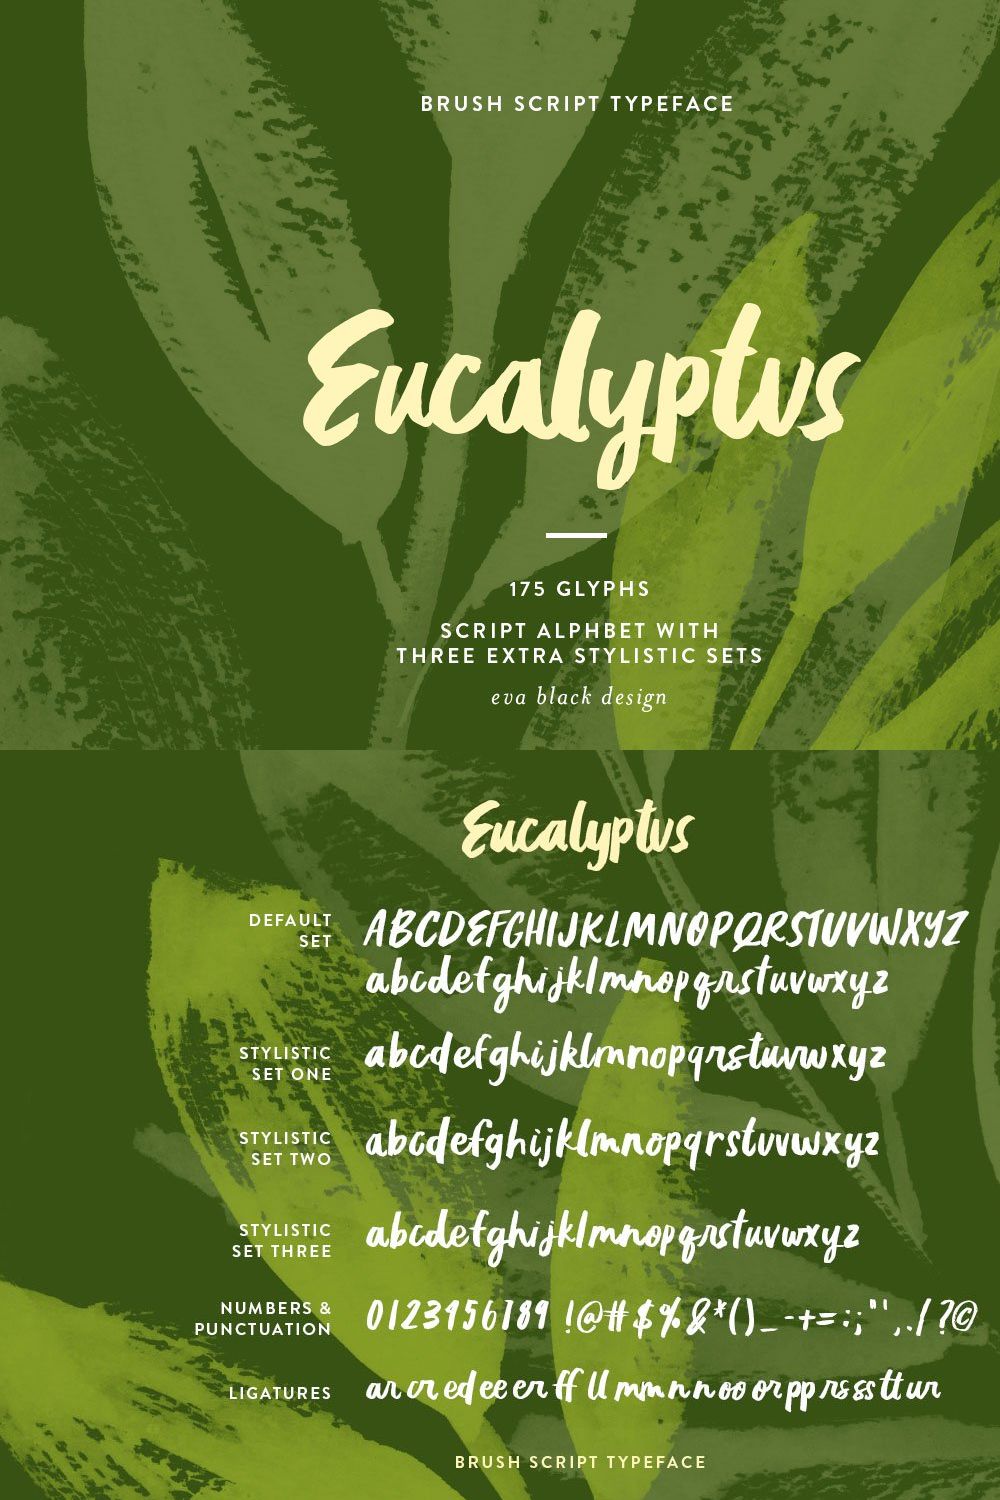 Eucalyptus Brush Script pinterest preview image.